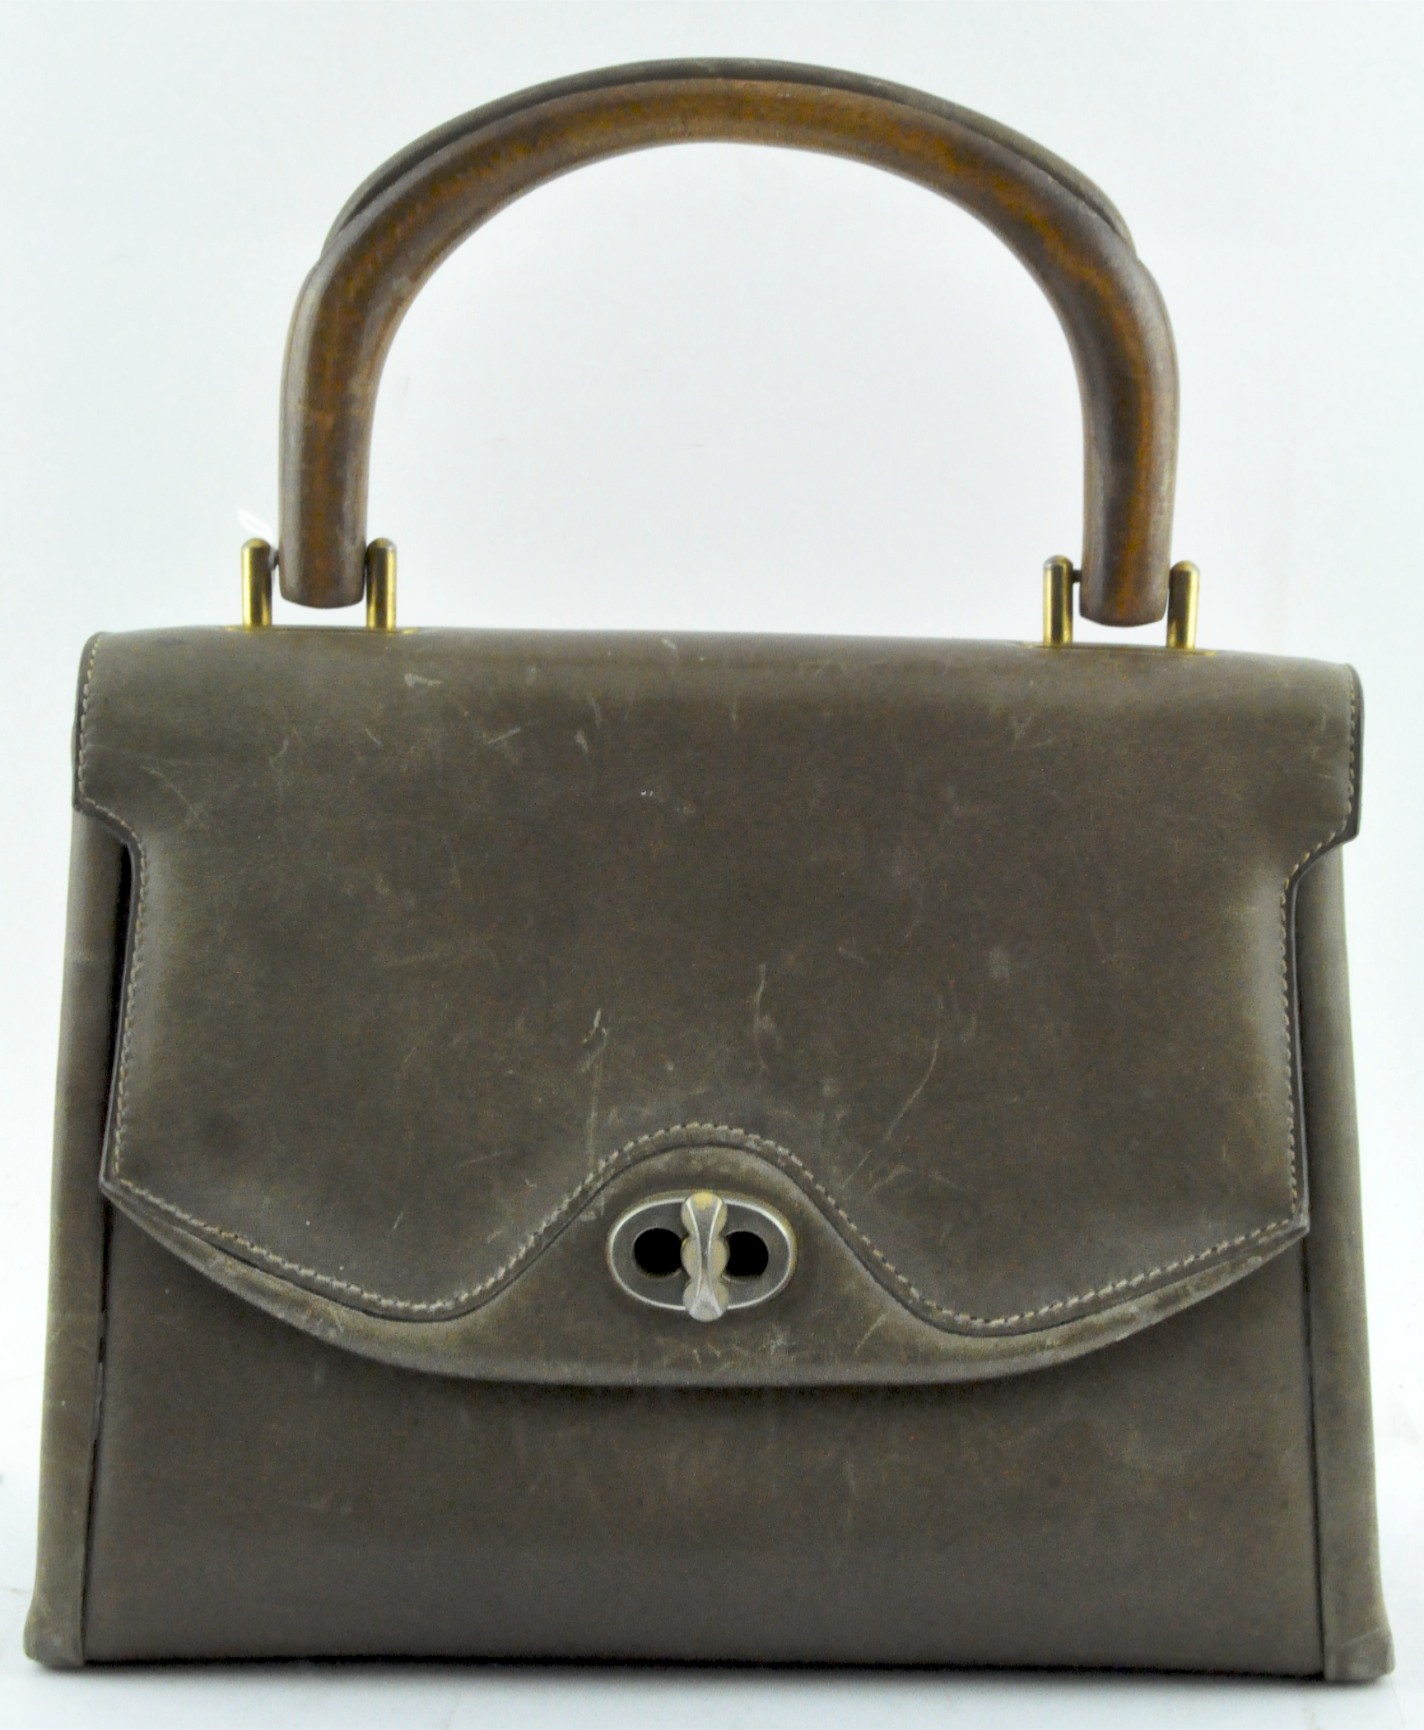 A vintage leather handbag,